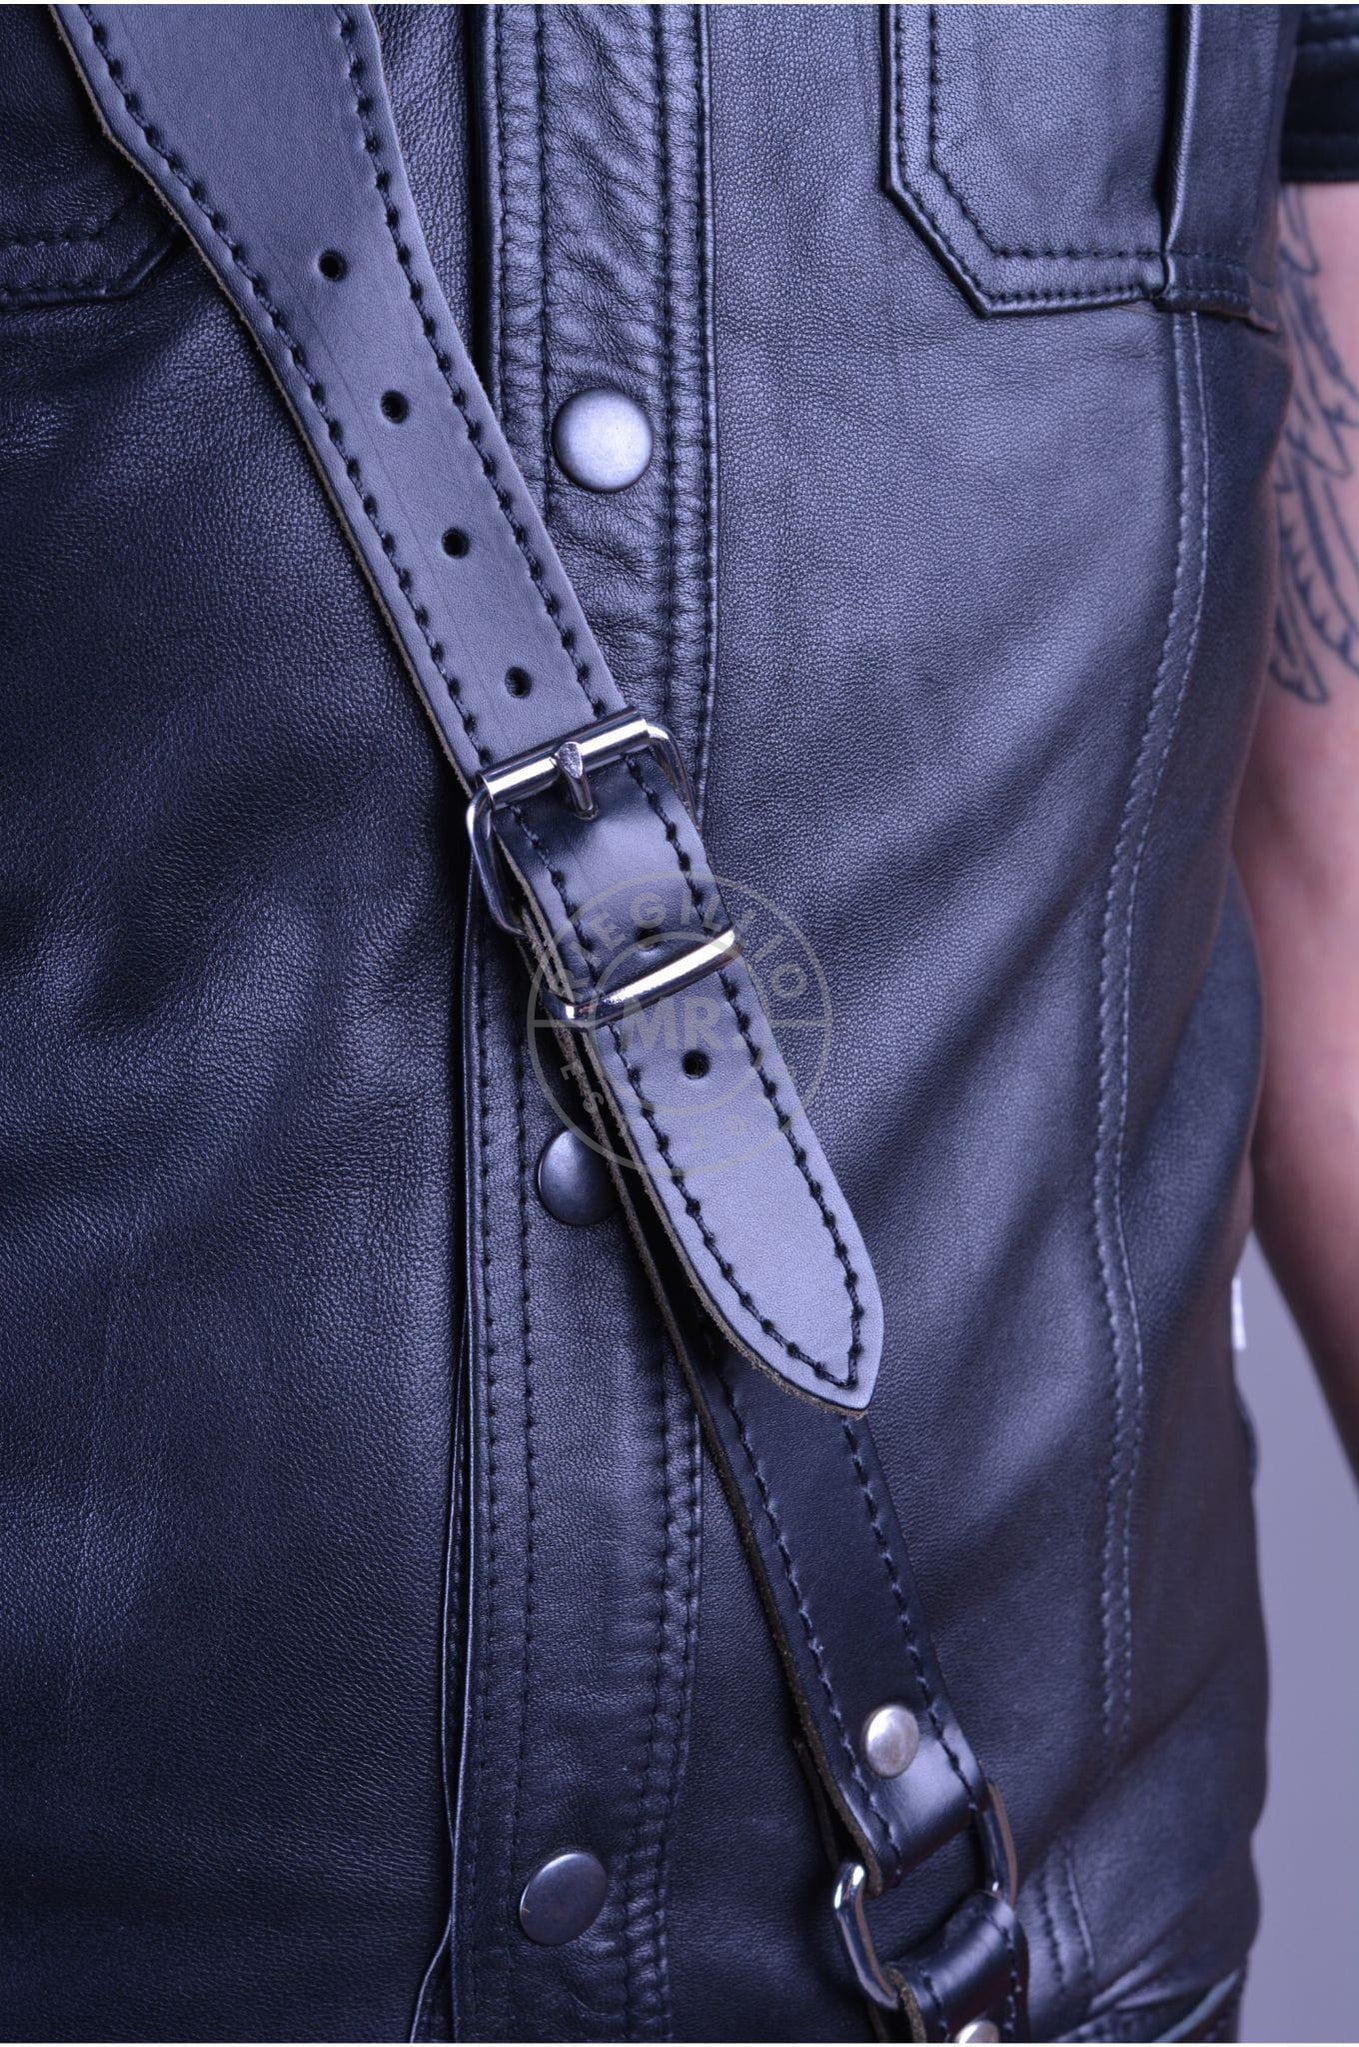 Mister B Leather Sam Browne Belt Stitched - Black at MR. Riegillio